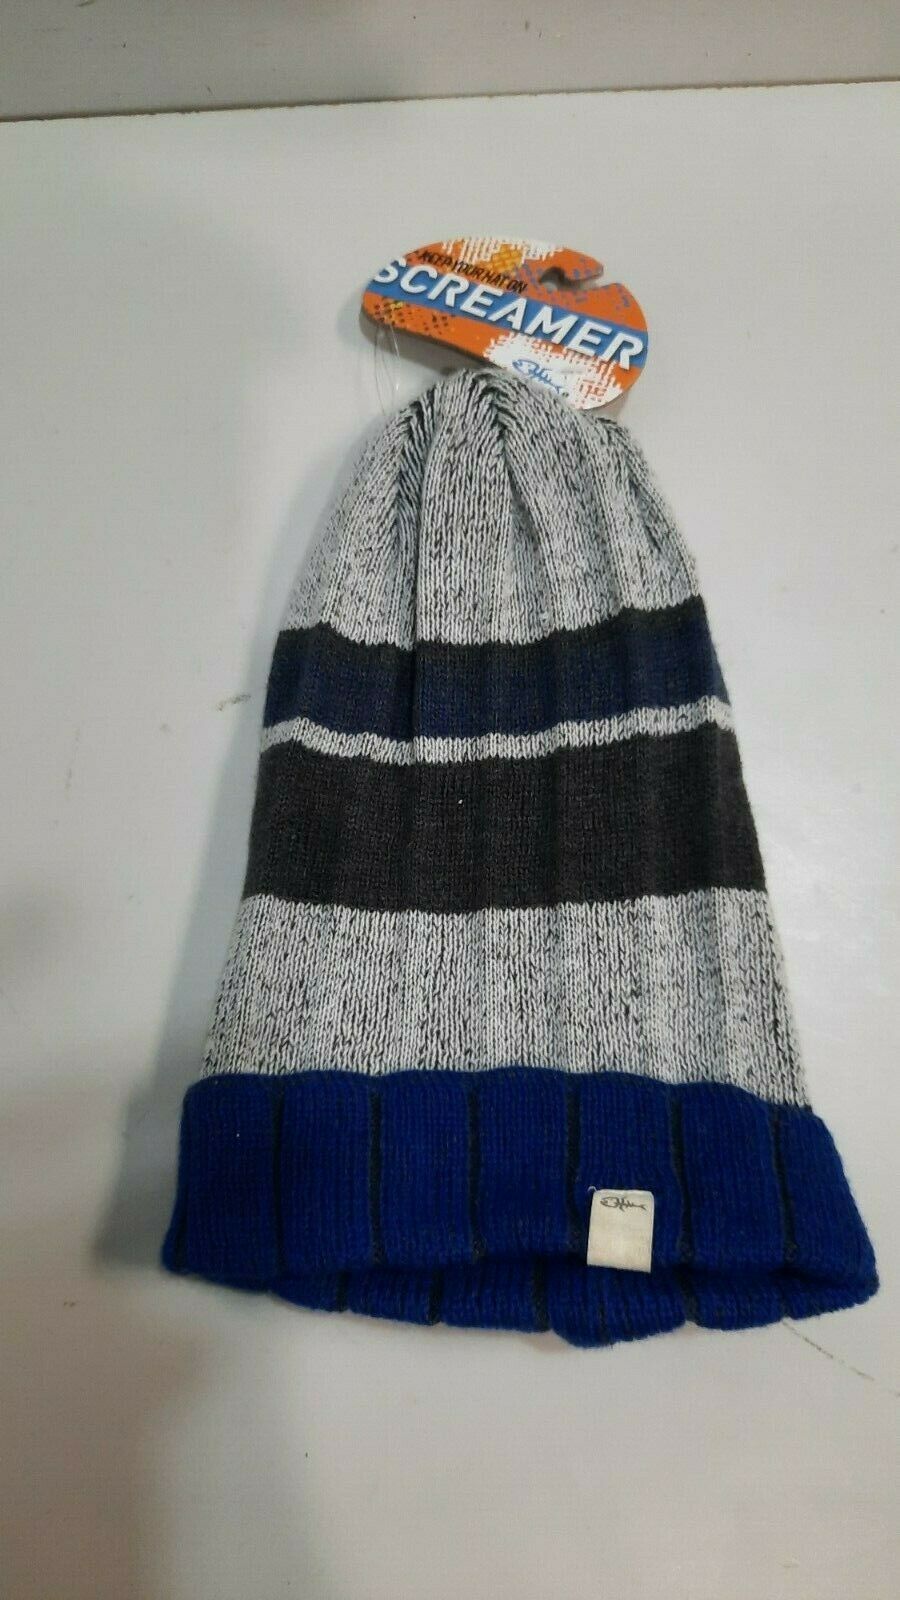 Screamer Winter Hat Size Adult